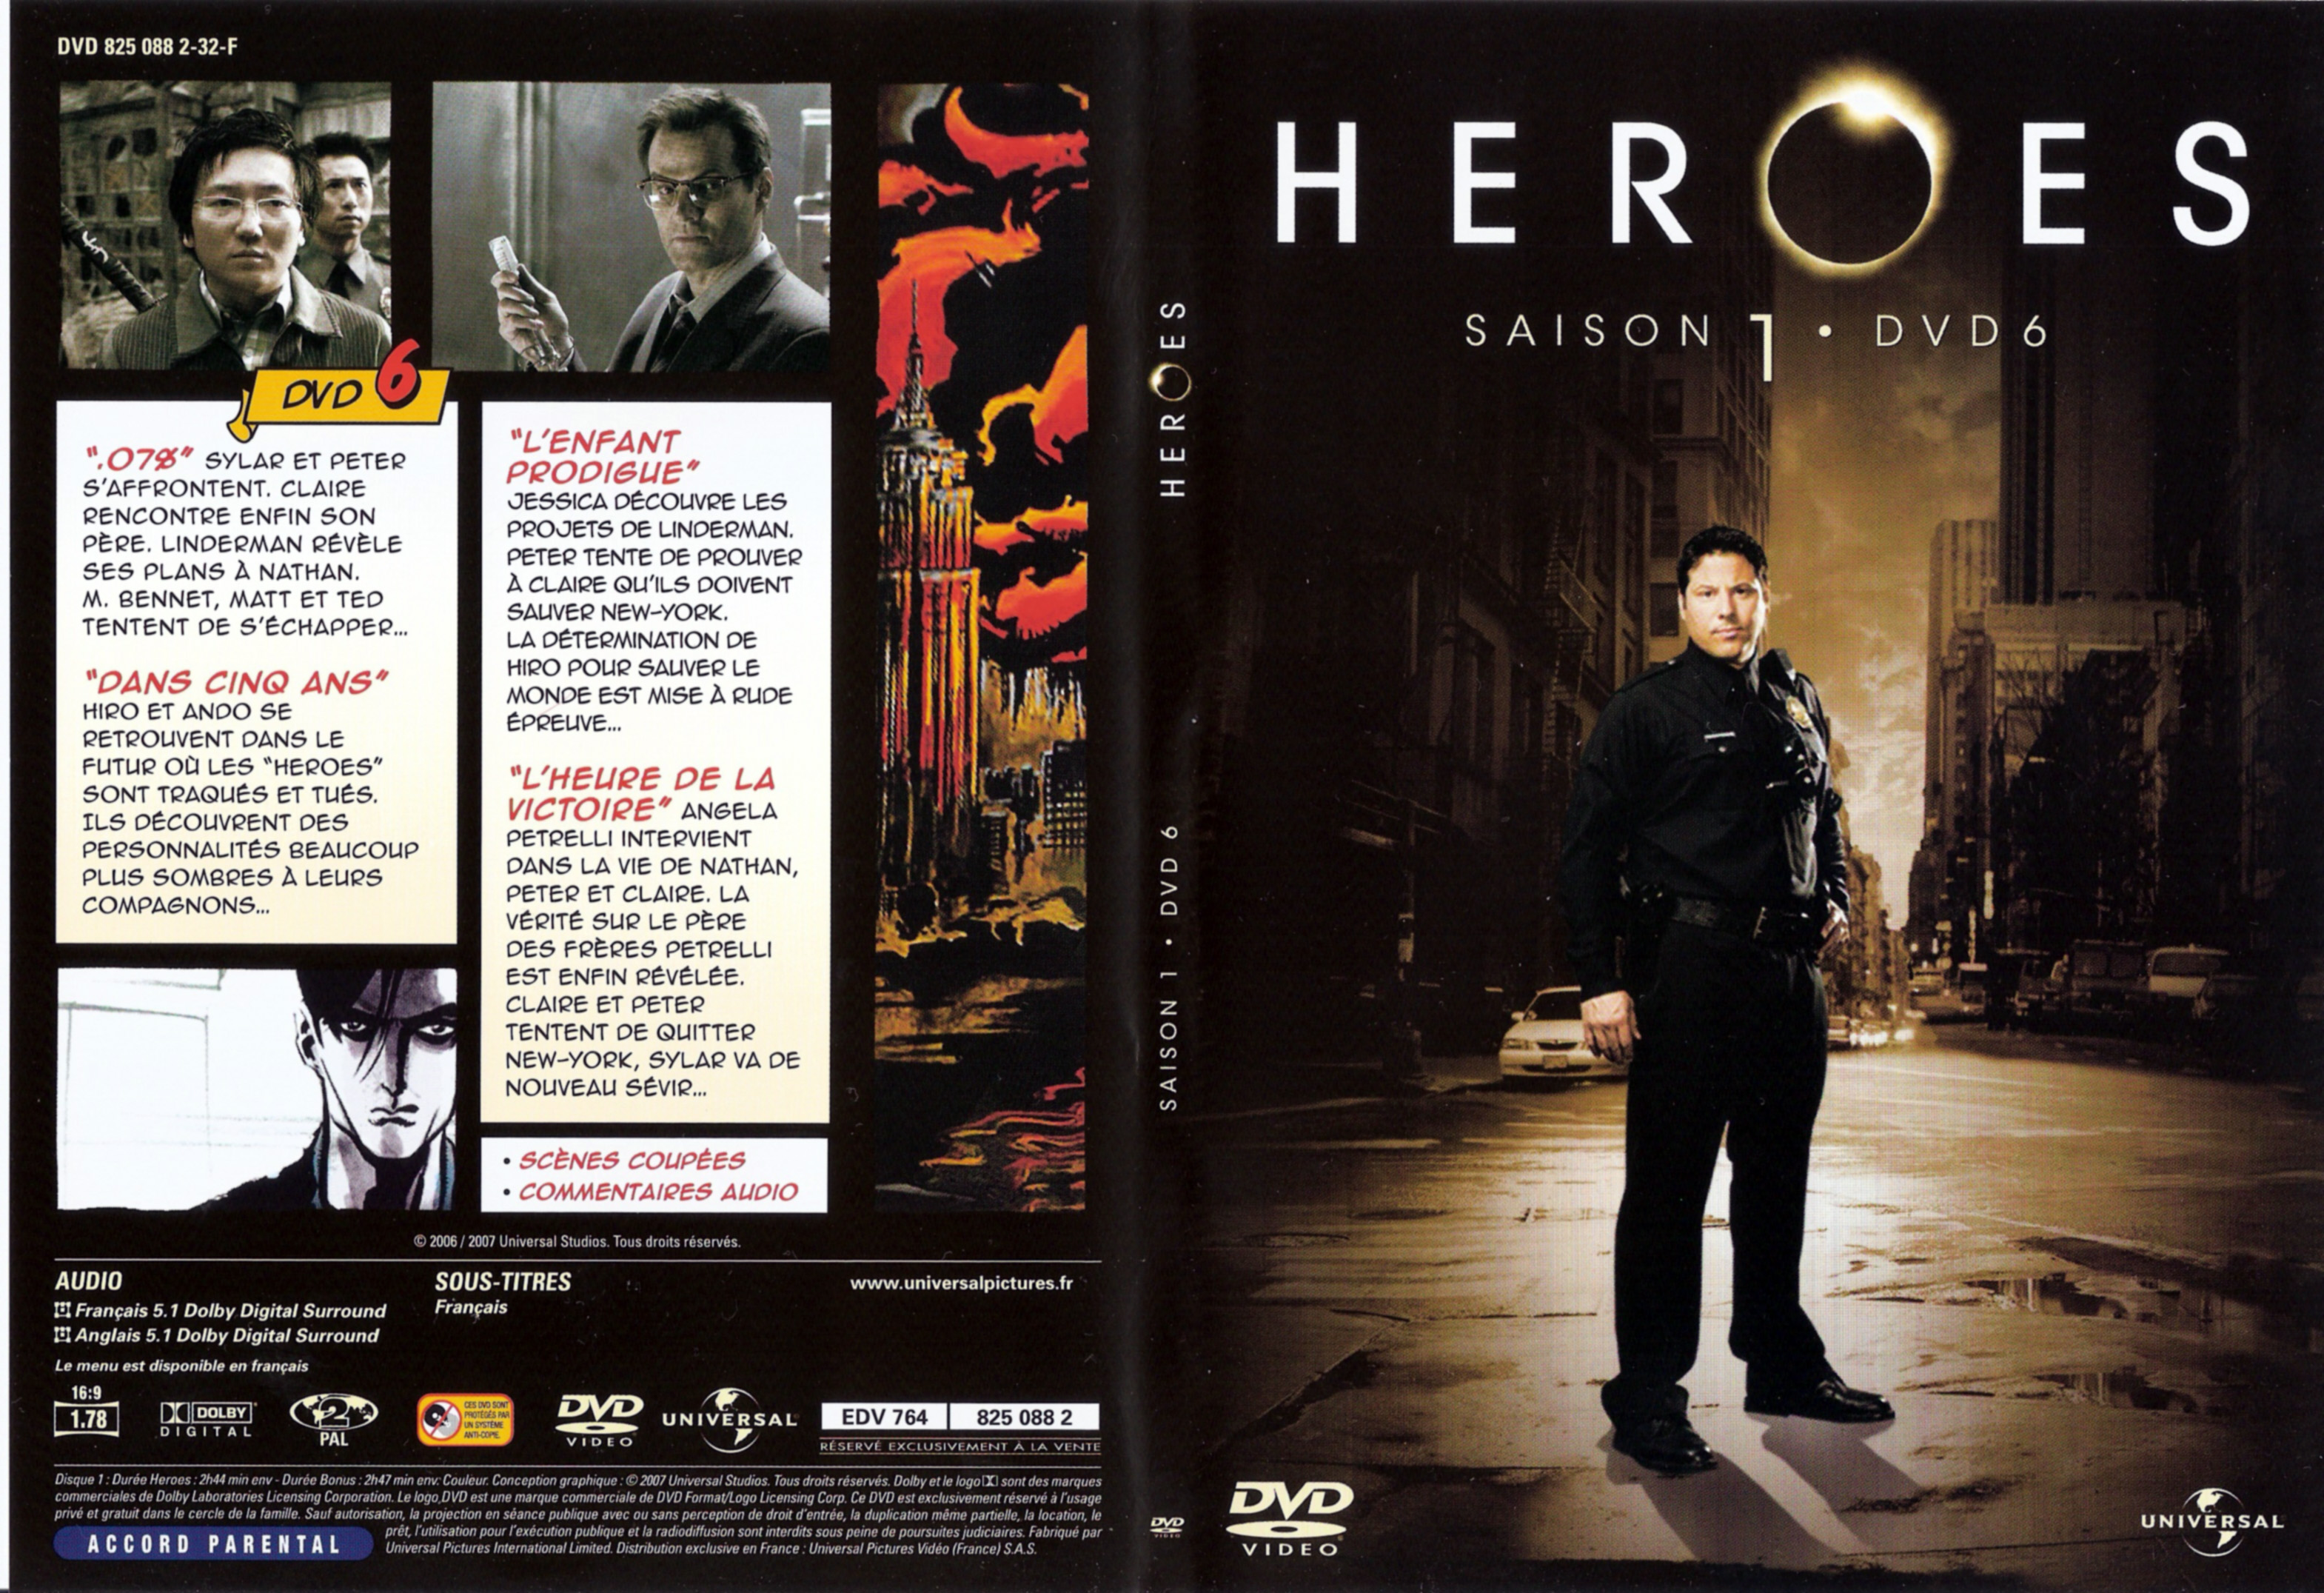 Jaquette DVD Heroes saison 1 DVD 6